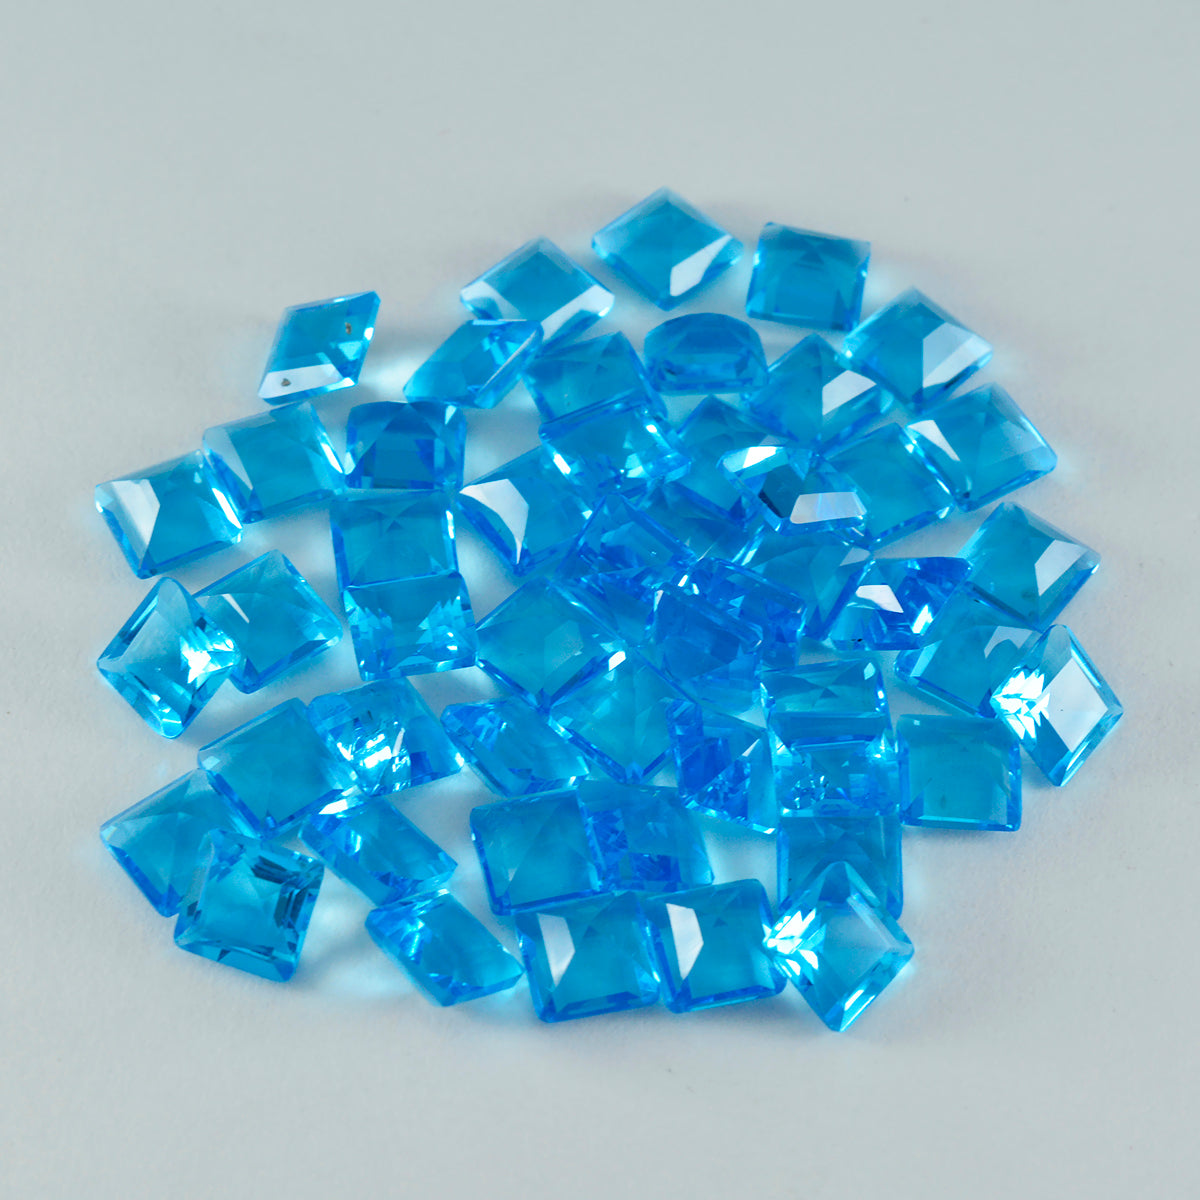 Riyogems 1PC Blue Topaz CZ Faceted 7x7 mm Square Shape pretty Quality Stone